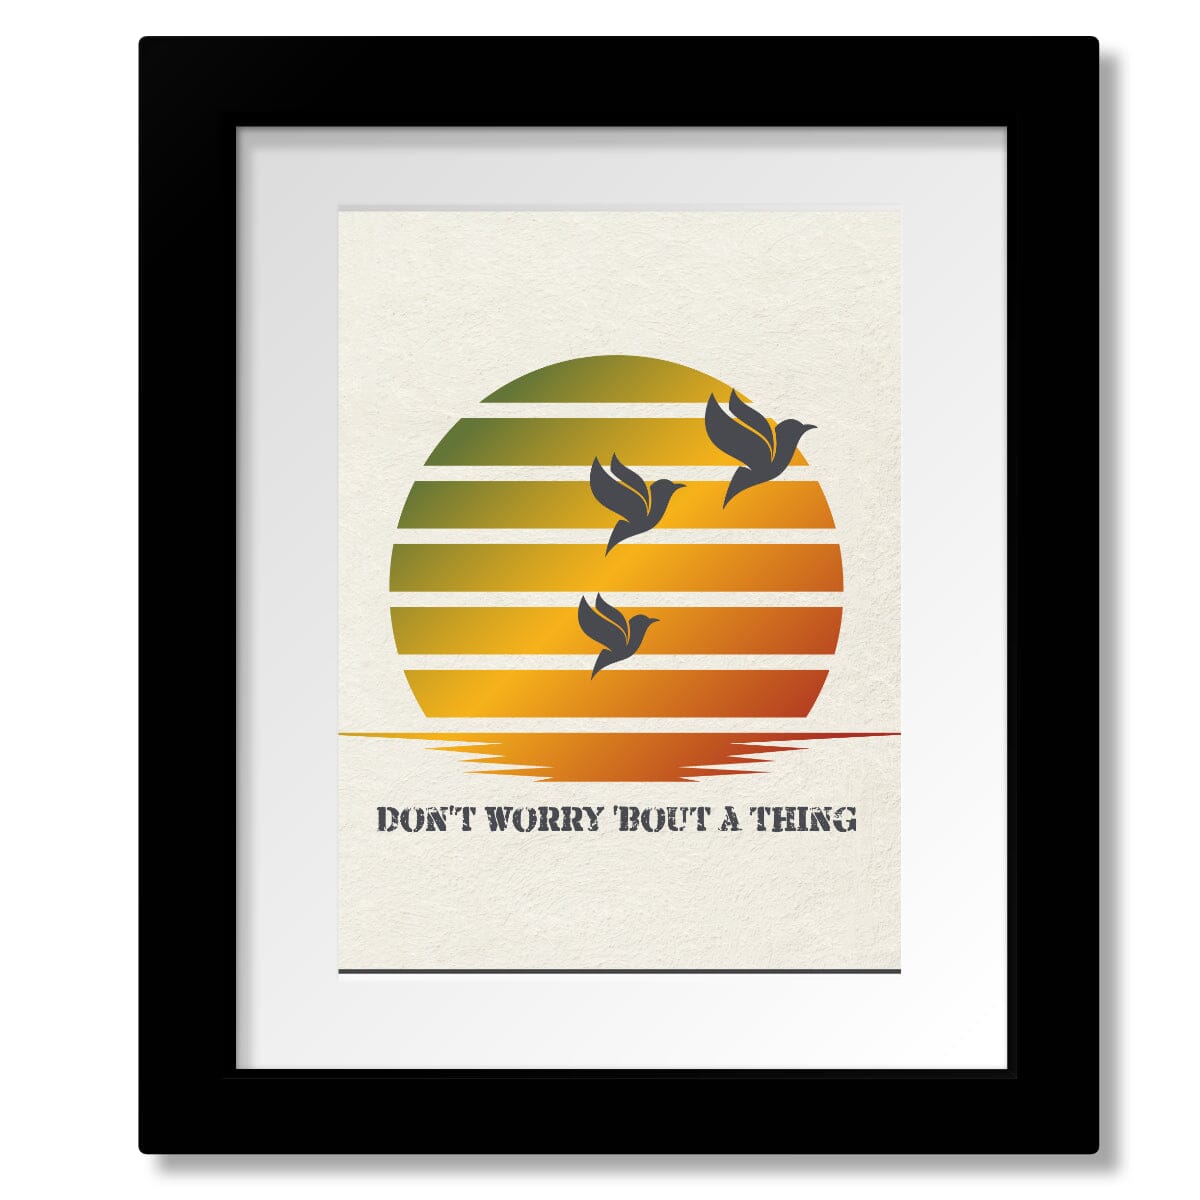 Three Little Birds by Bob Marley - Reggae Song Lyric Art Song Lyrics Art Song Lyrics Art 8x10 Matted and Framed Print 